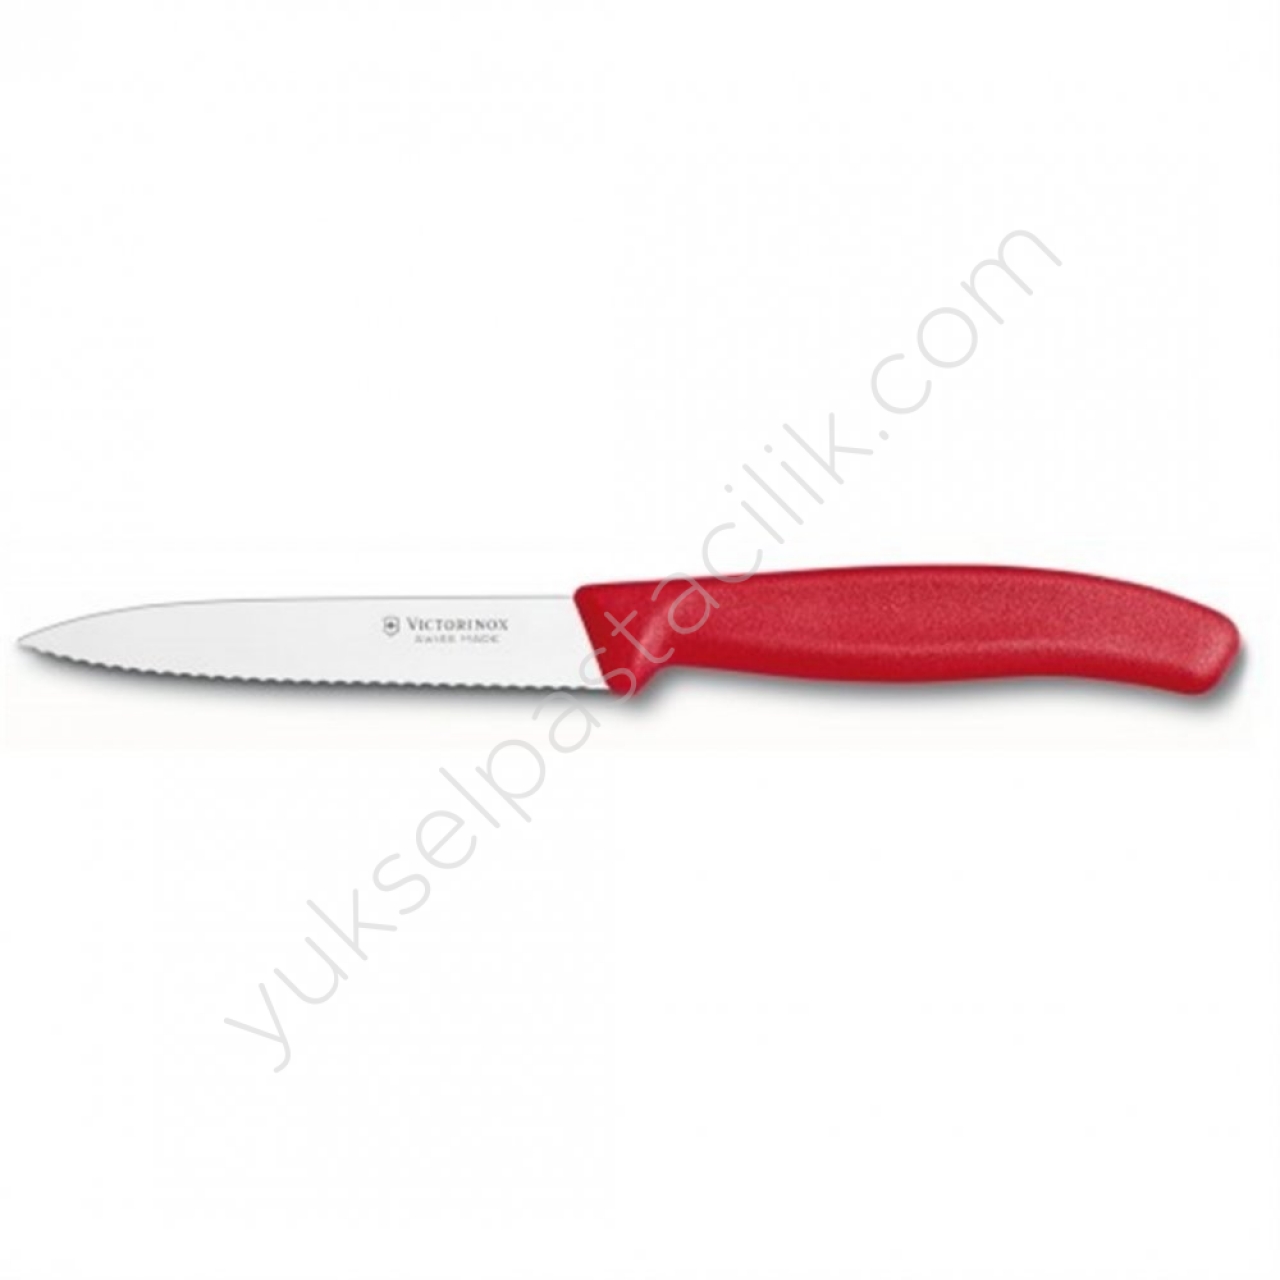 Victorinox Mutfak Bıçak 10 Cm